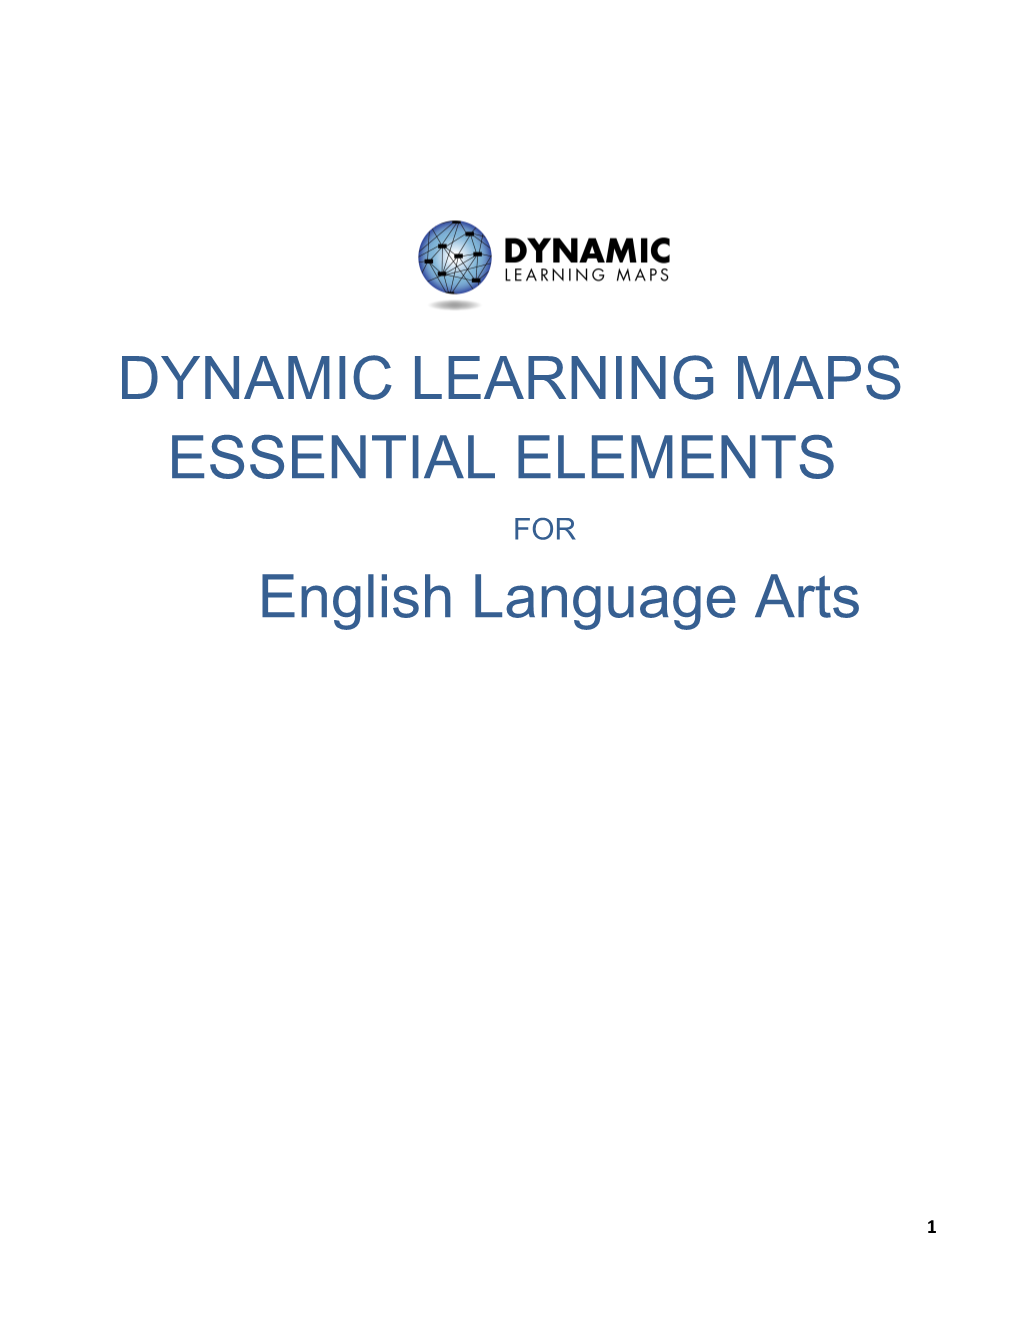 DLM Essential Elements - ELA